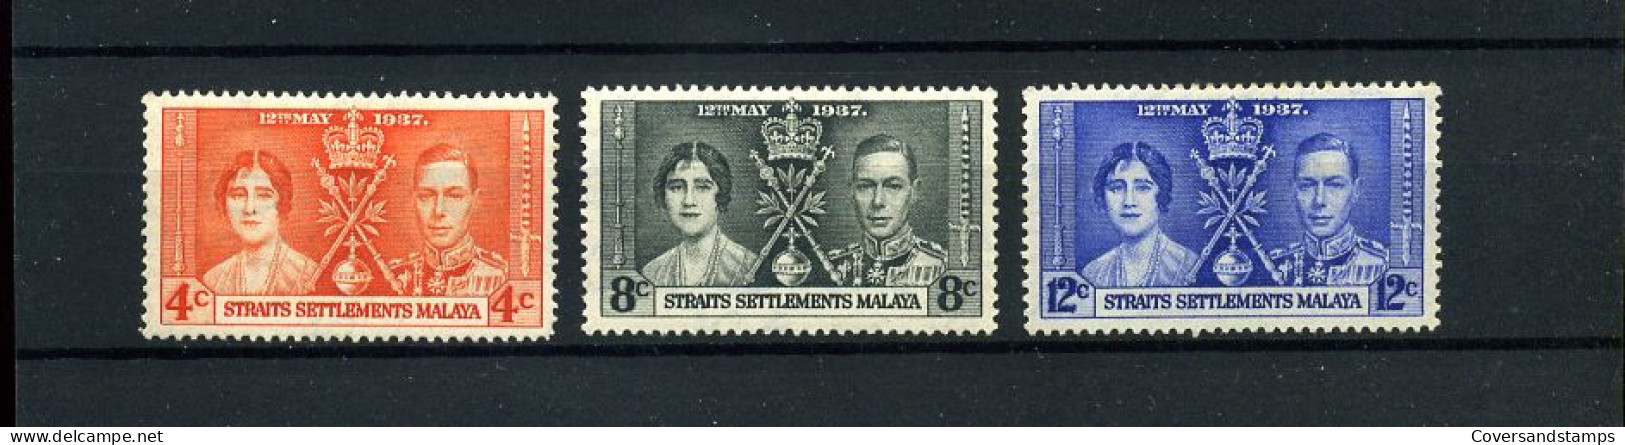 Straits Settlements Malaya  - Coronation 1937 -  MH - Straits Settlements